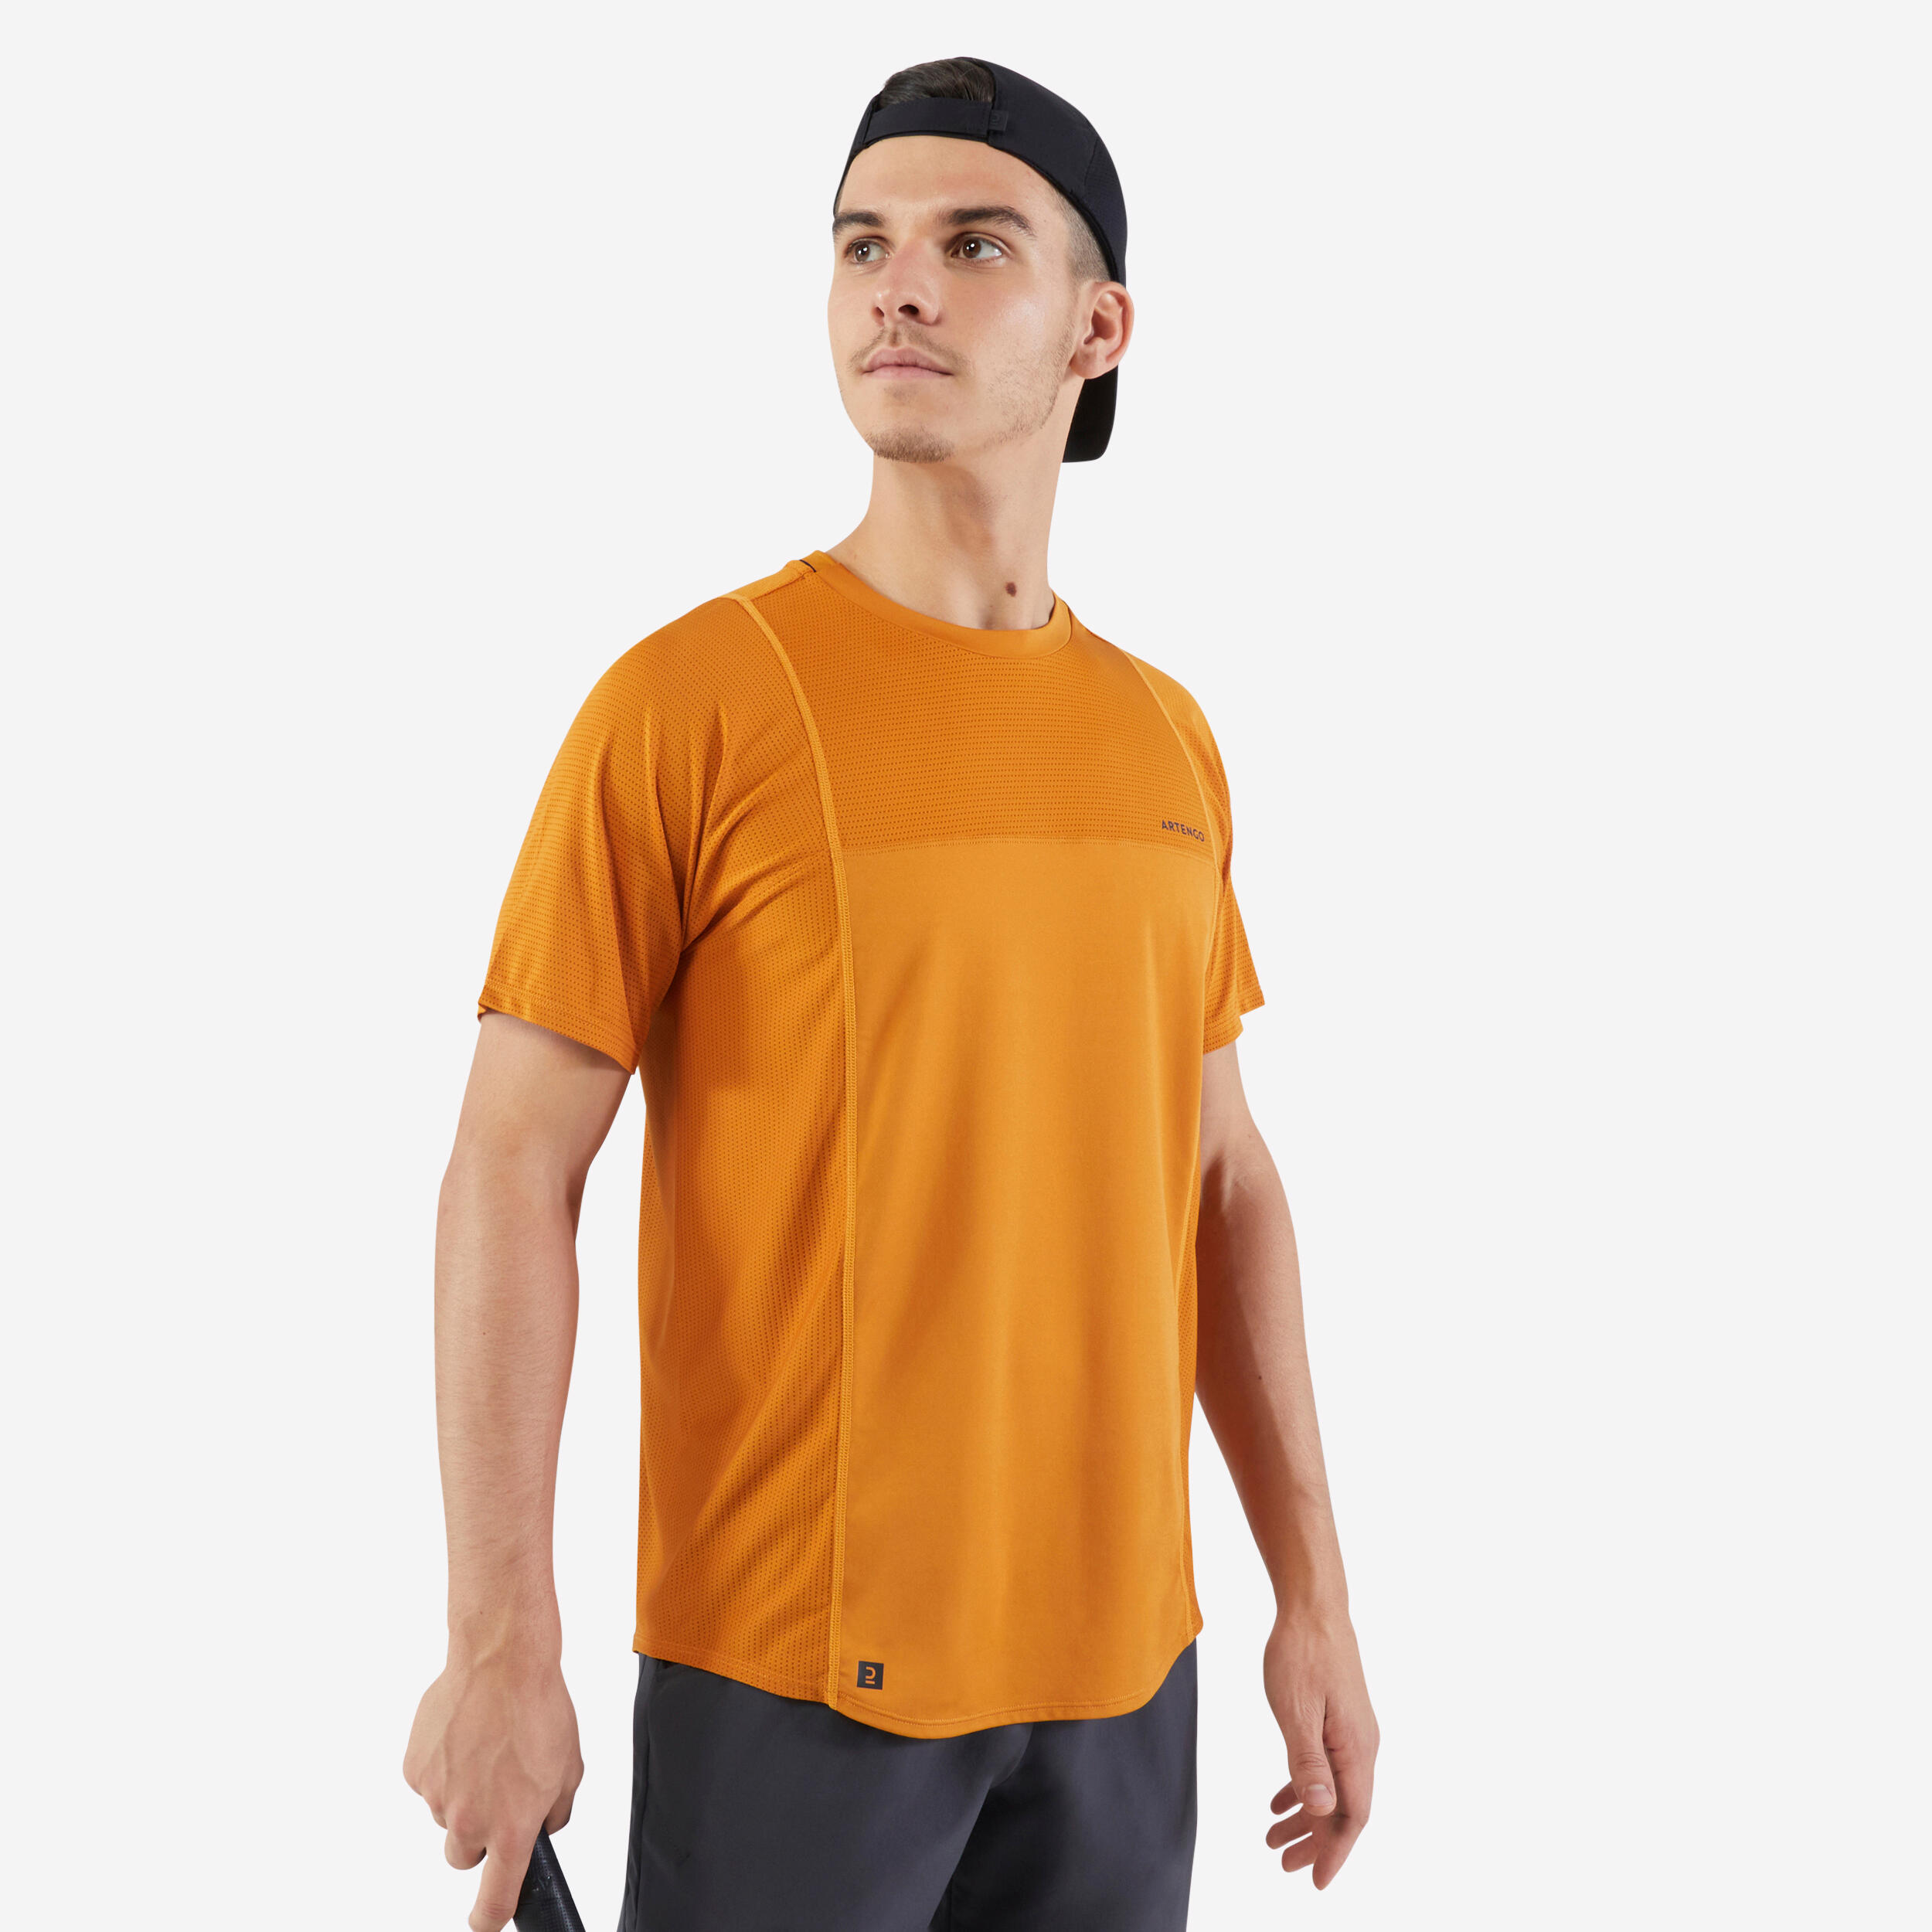 Men's Short-Sleeved Tennis T-Shirt Dry - Ochre Gaël Monfils 1/4